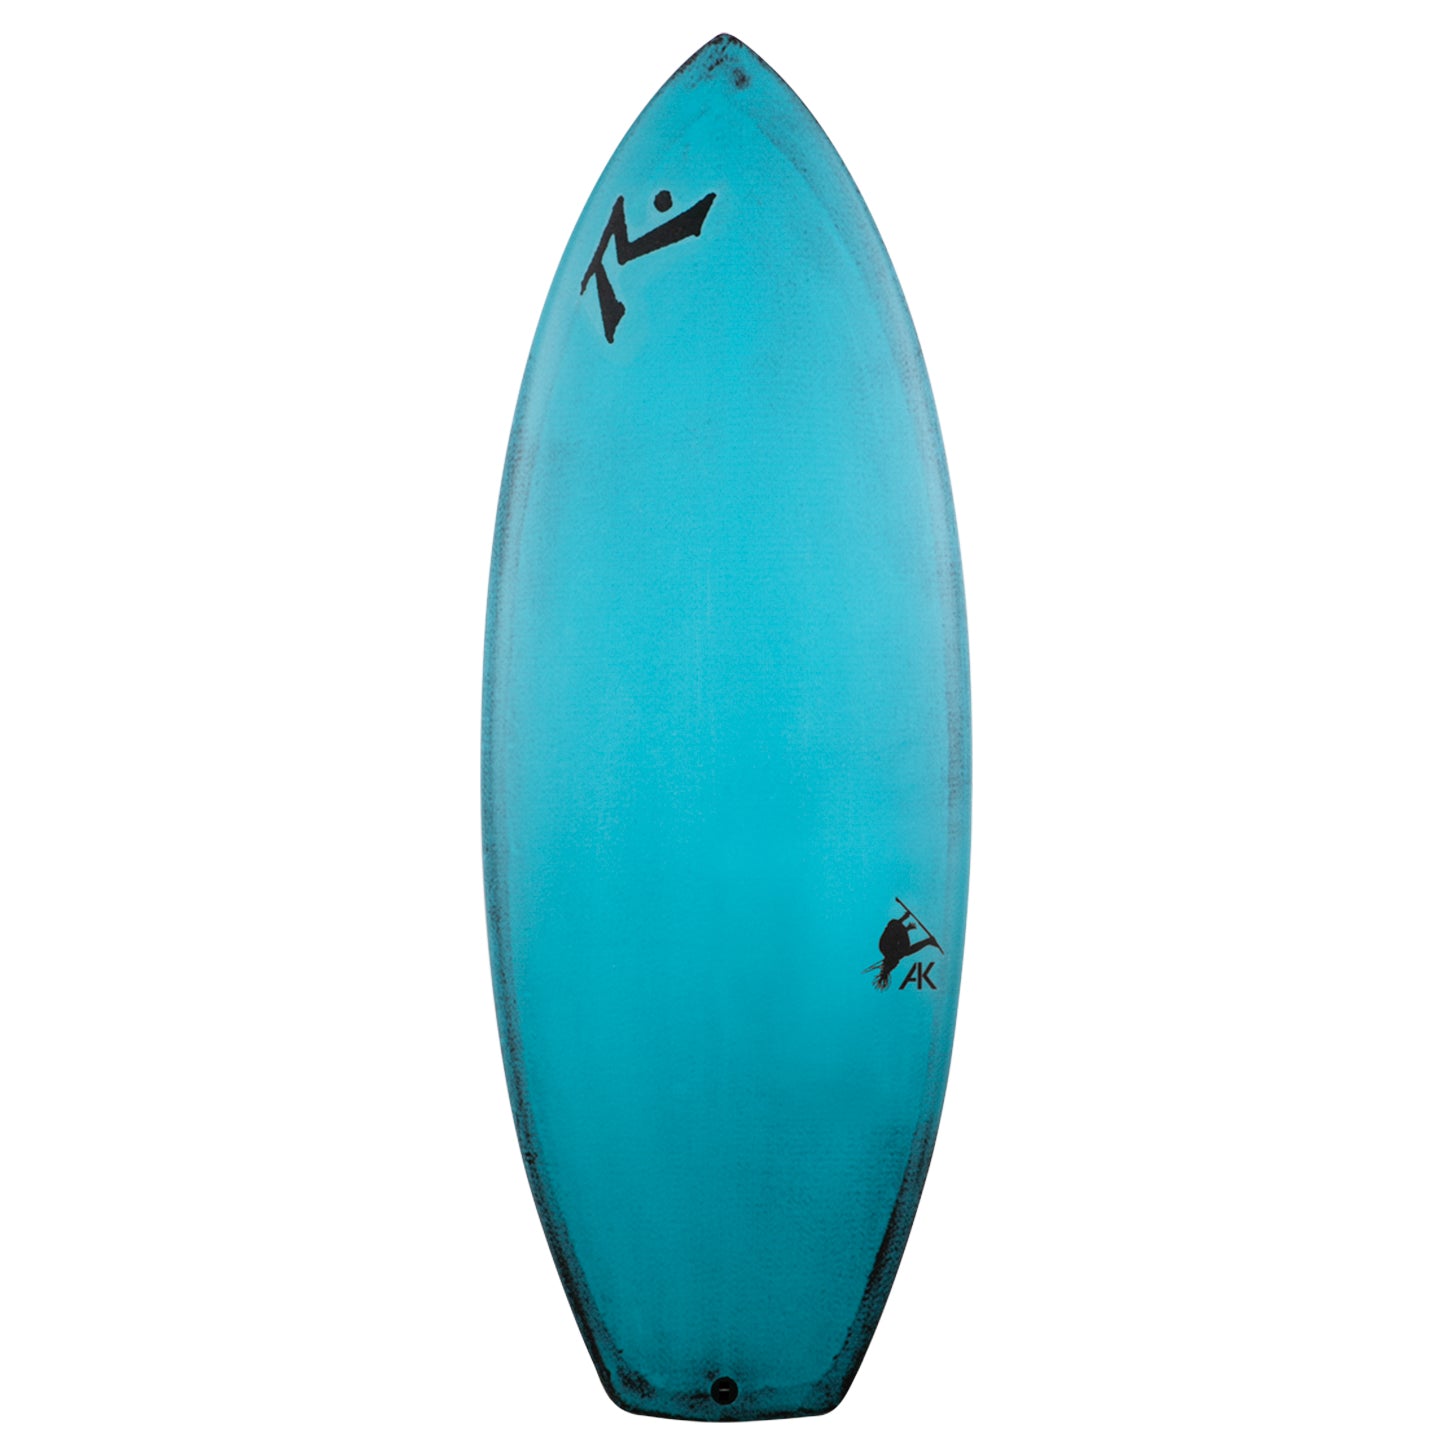 Pint Dark Arts - Carbon Black - Deck View - Austin Keen Wakesurf board - Rusty Surfboards